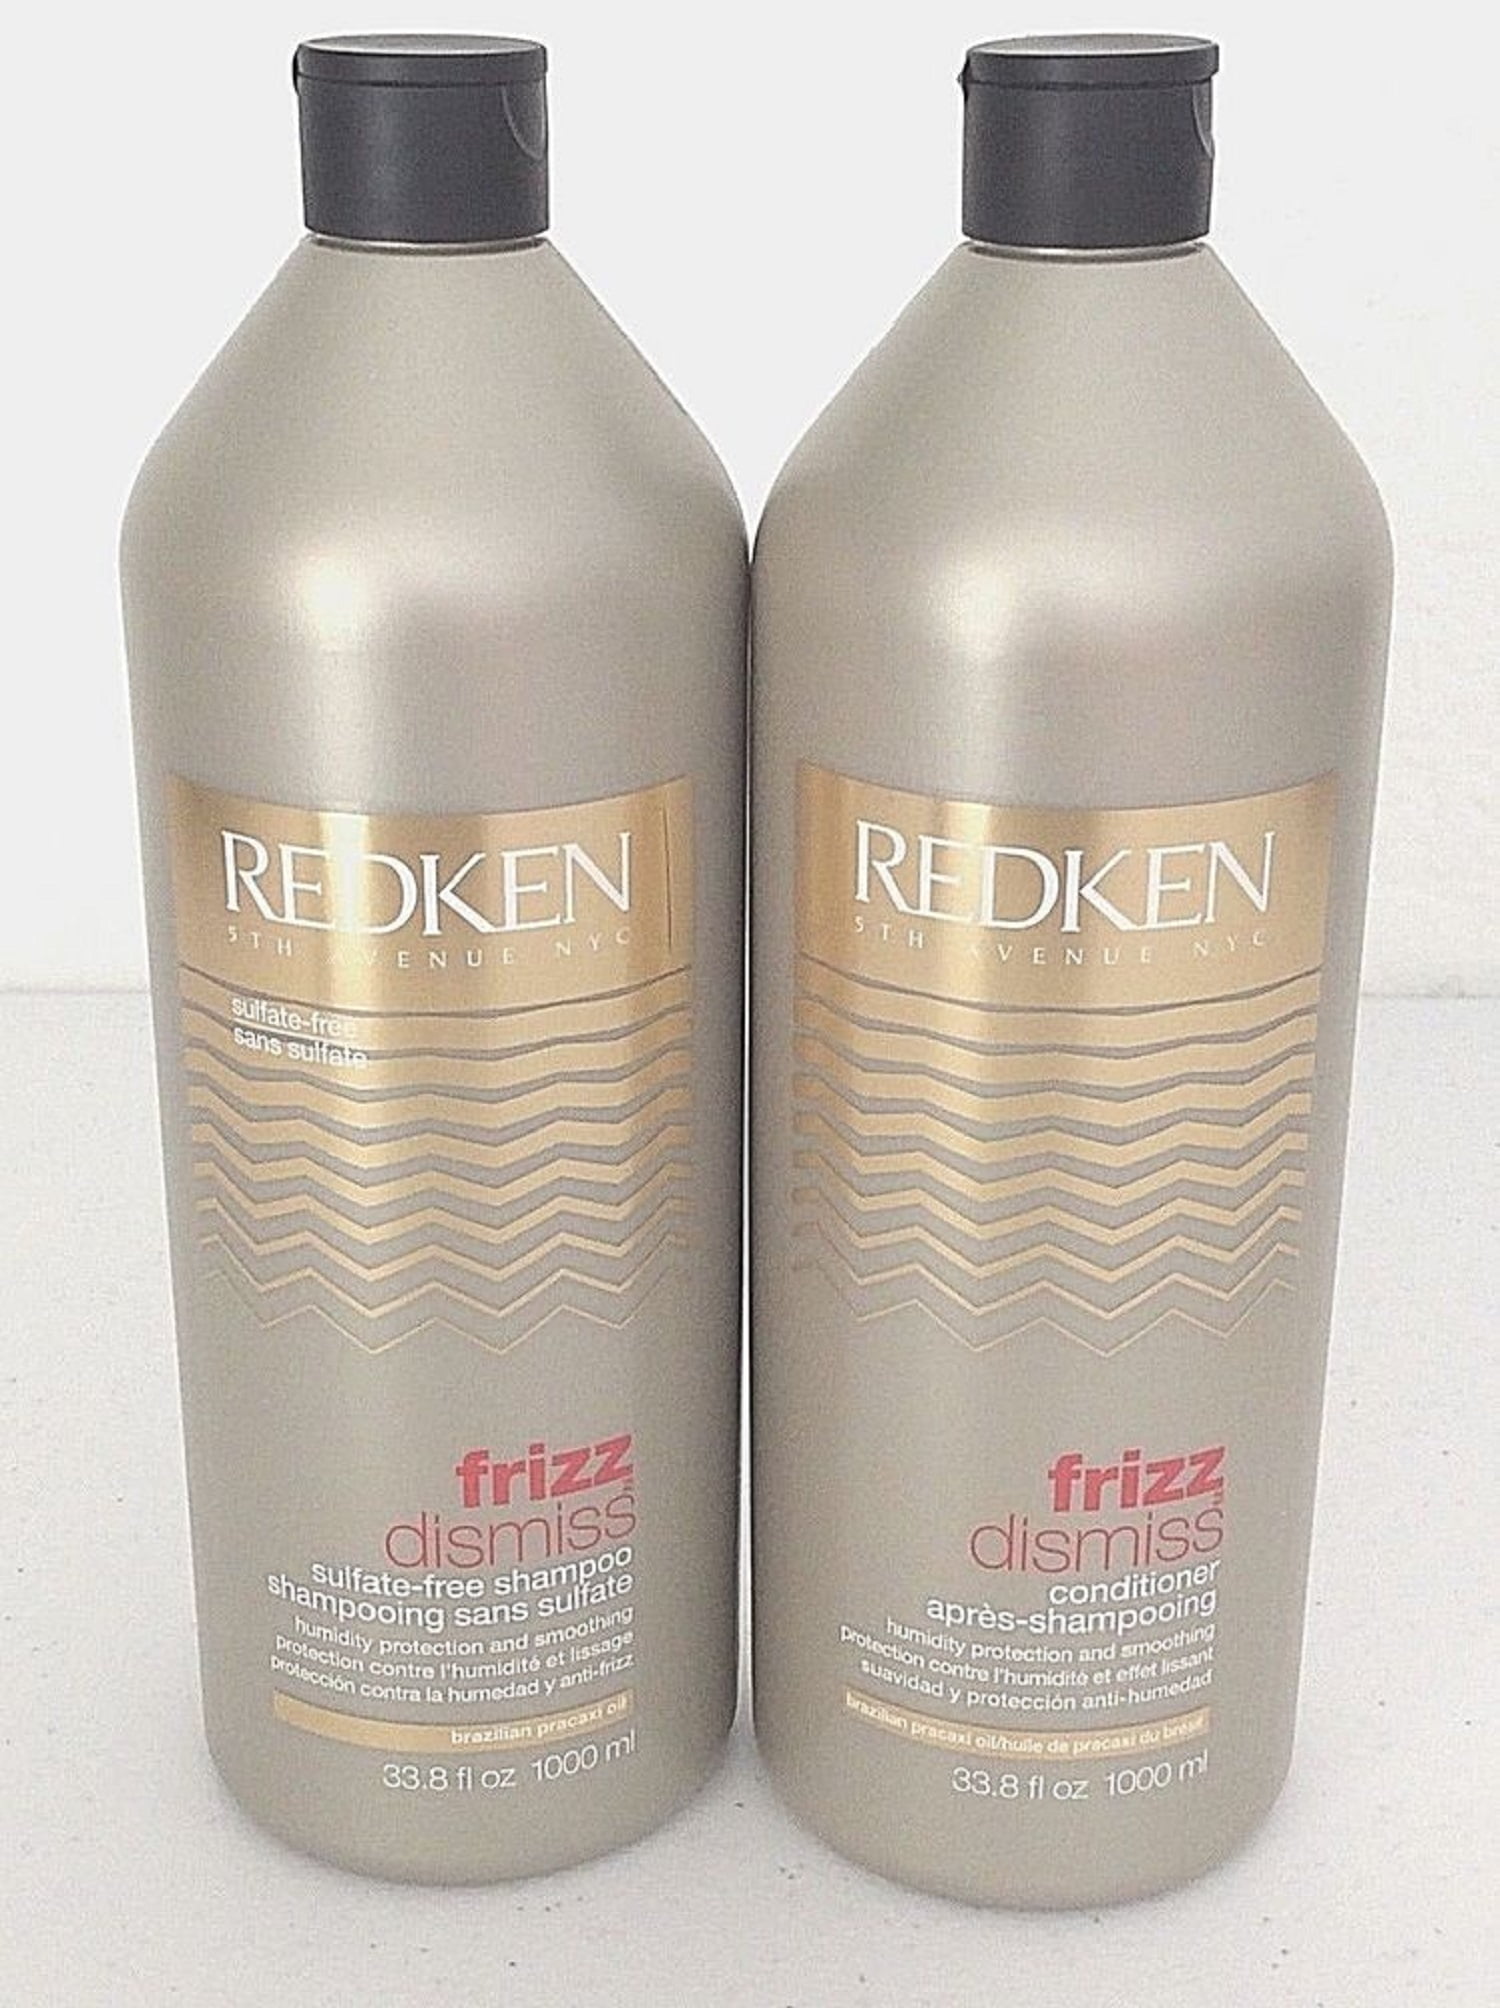 Redken - Redken Frizz Dismiss Shampoo and Conditioner 33.8 fl oz Set